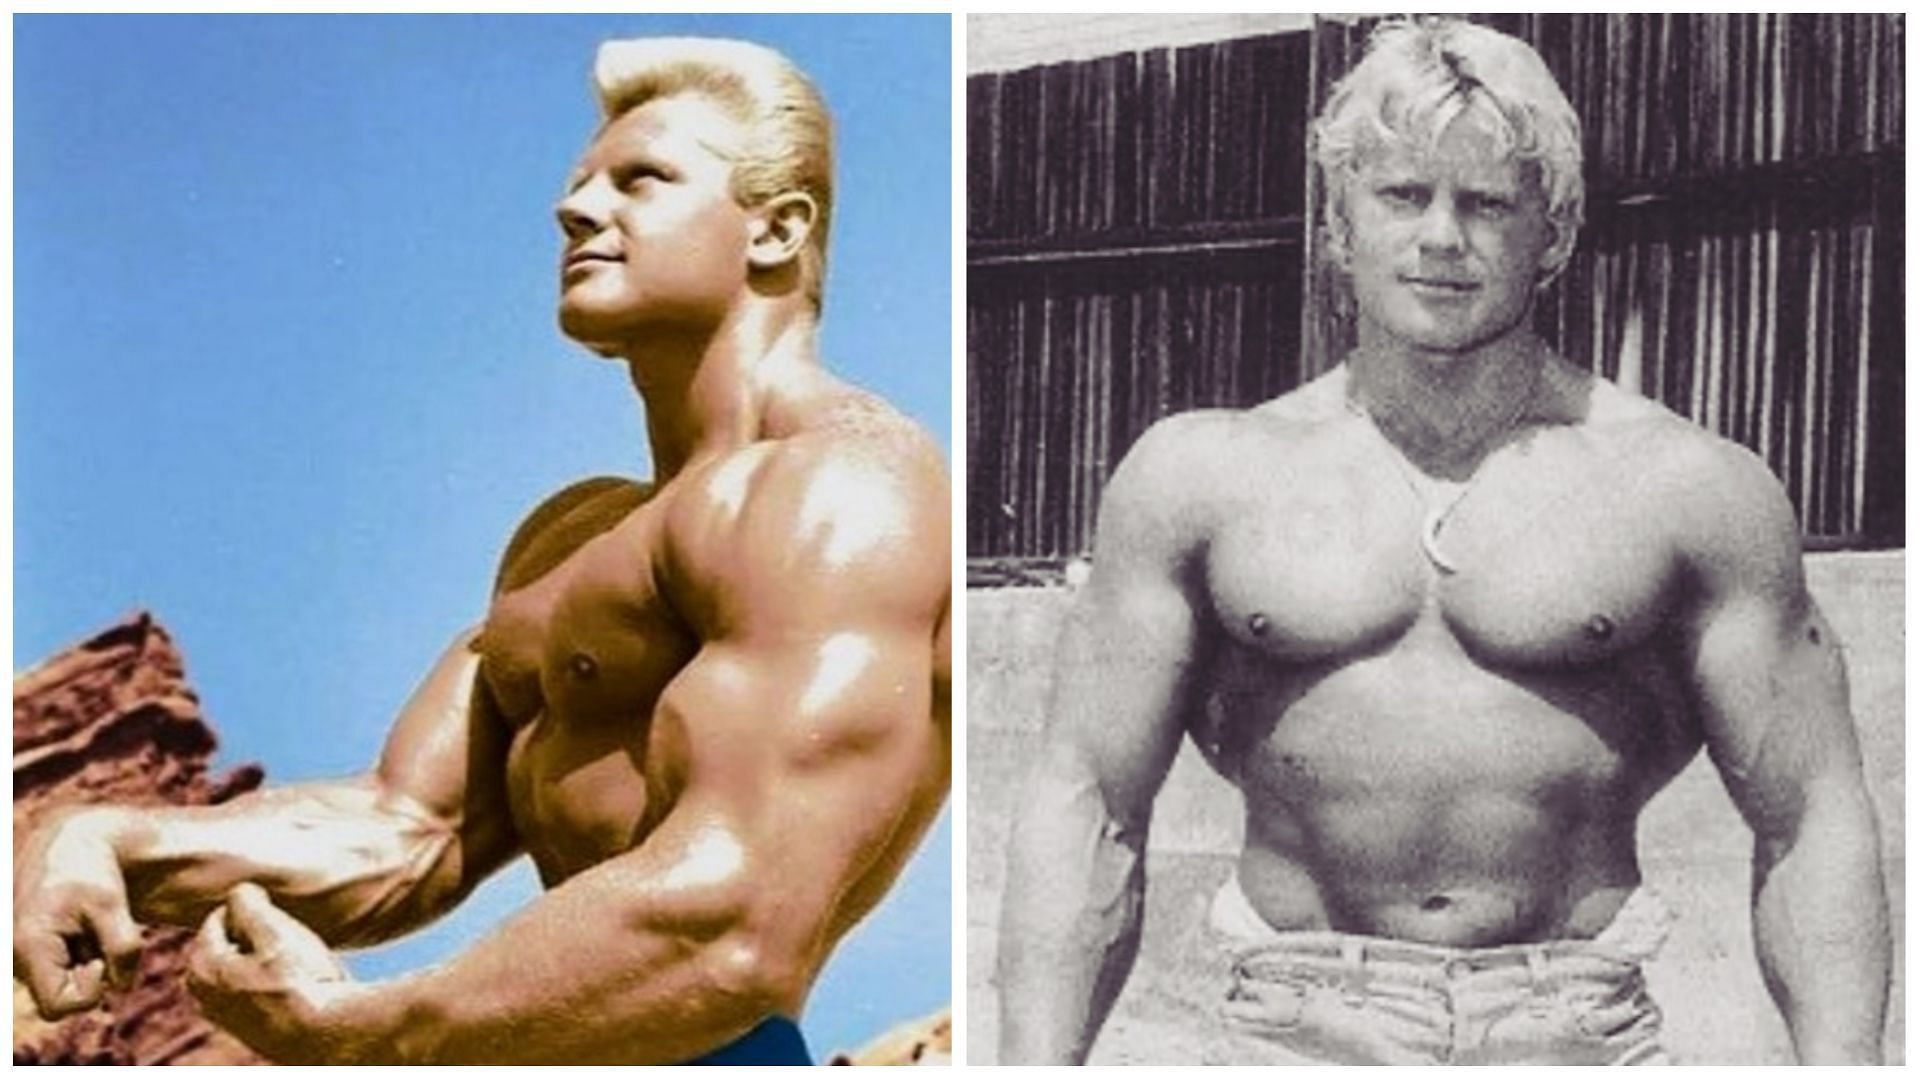 Dave Draper had a key role in popularizing bodybuilding. (Image via Instagram)